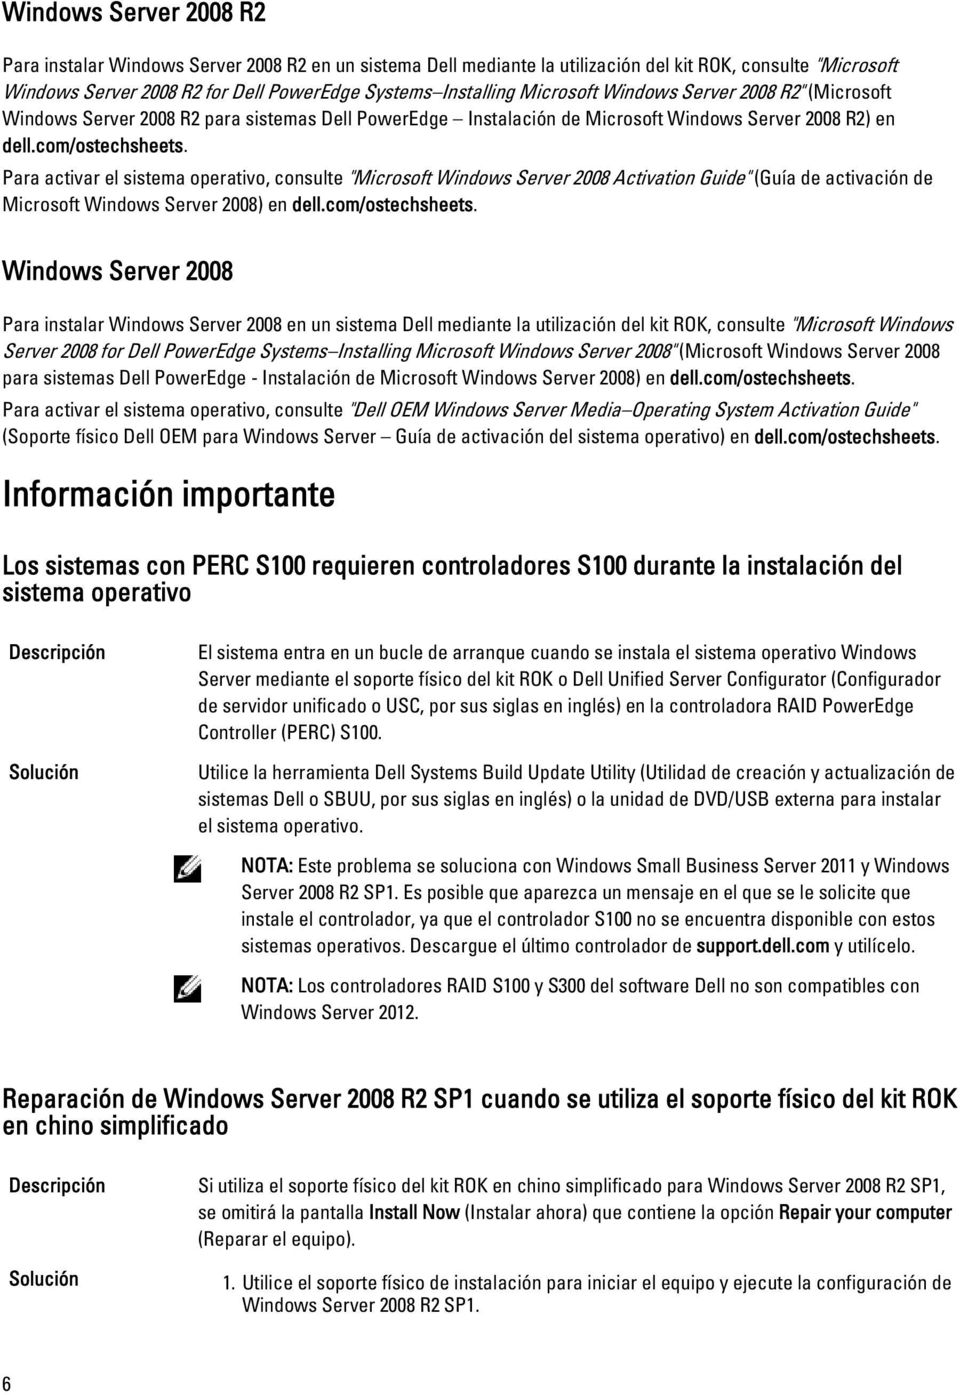 Para activar el sistema operativo, consulte "Microsoft Windows Server 2008 Activation Guide" (Guía de activación de Microsoft Windows Server 2008) en dell.com/ostechsheets.